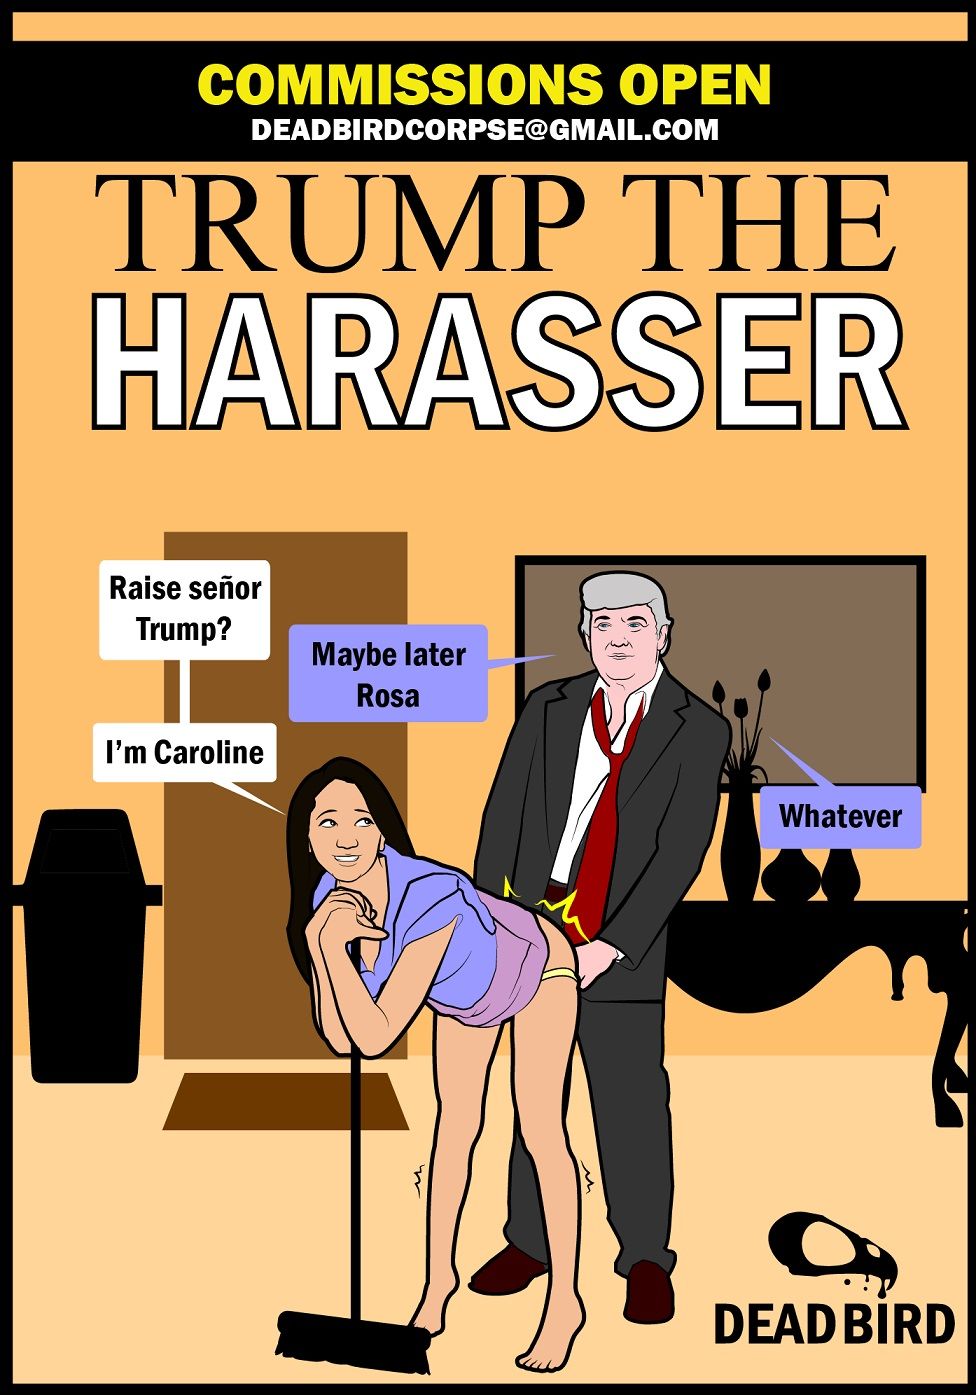 ट्रम्प के harasser